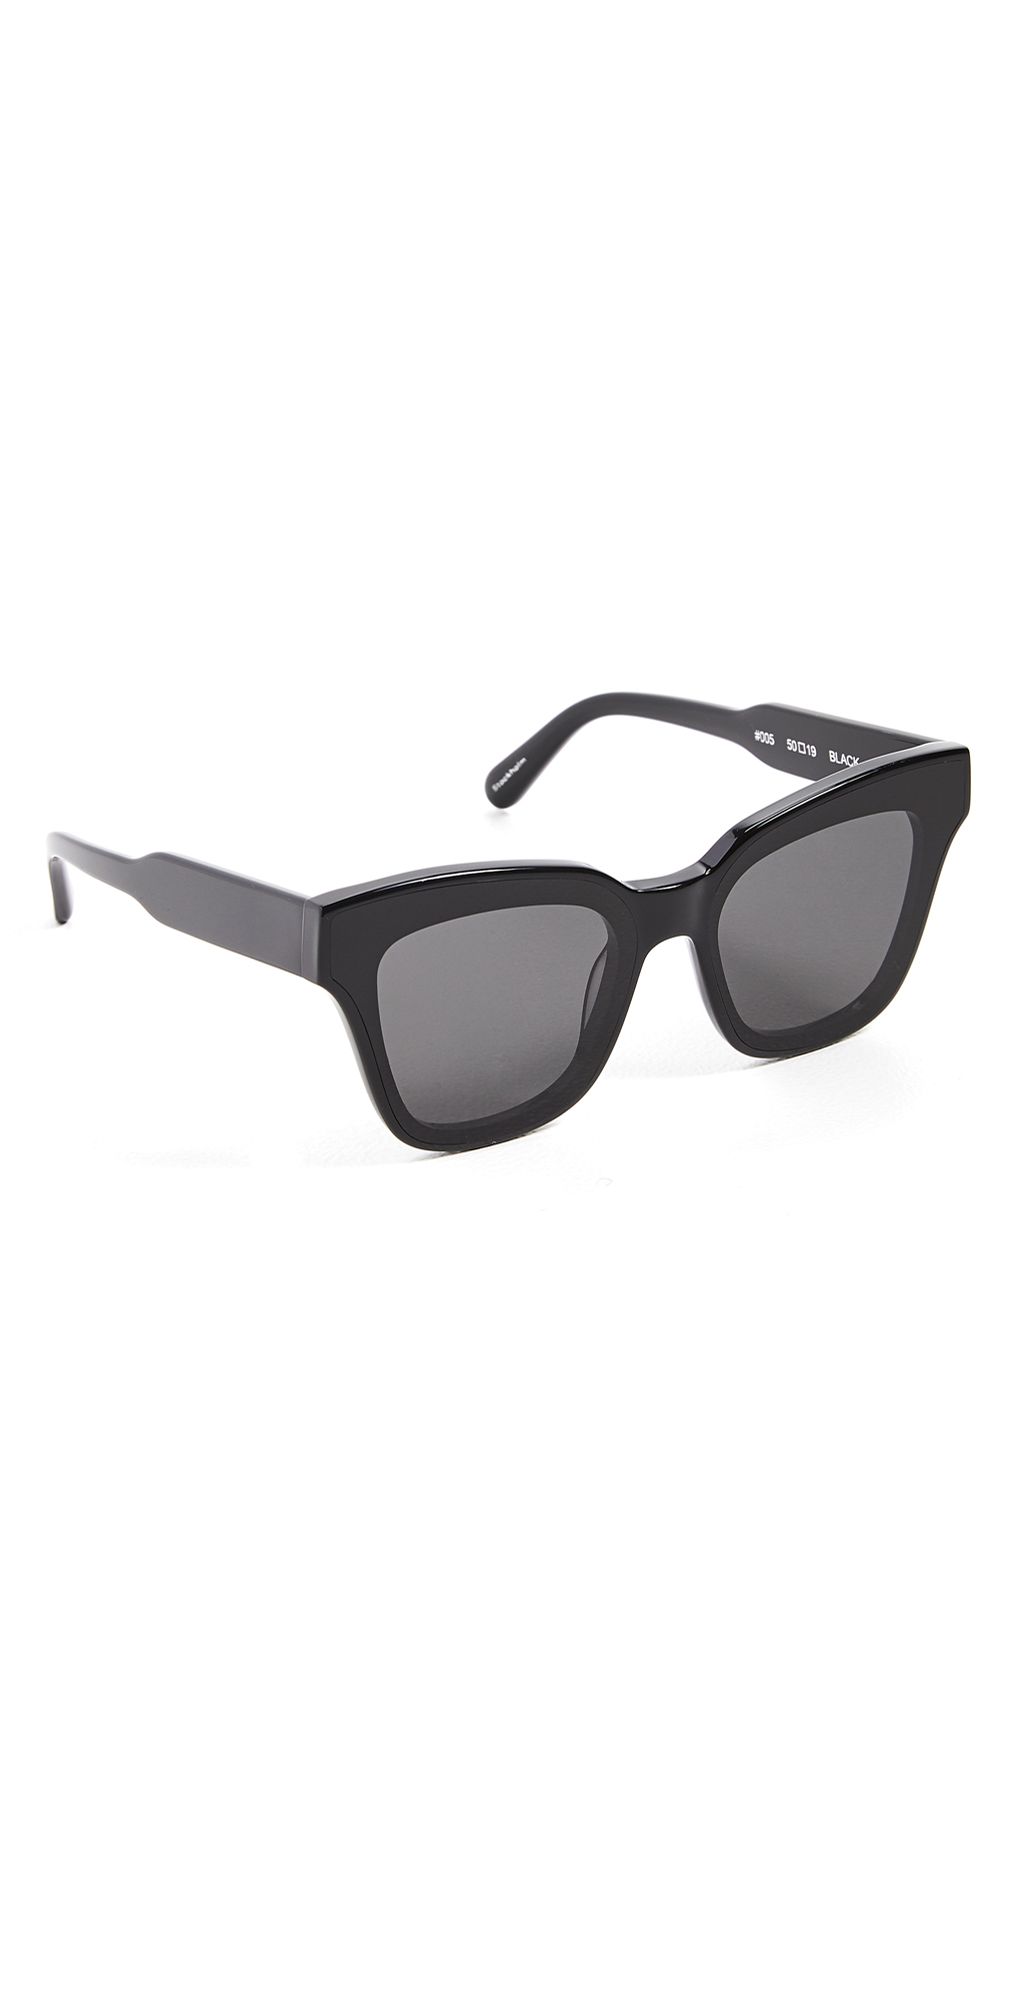 Chimi 005 Overlay Sunglasses | Shopbop